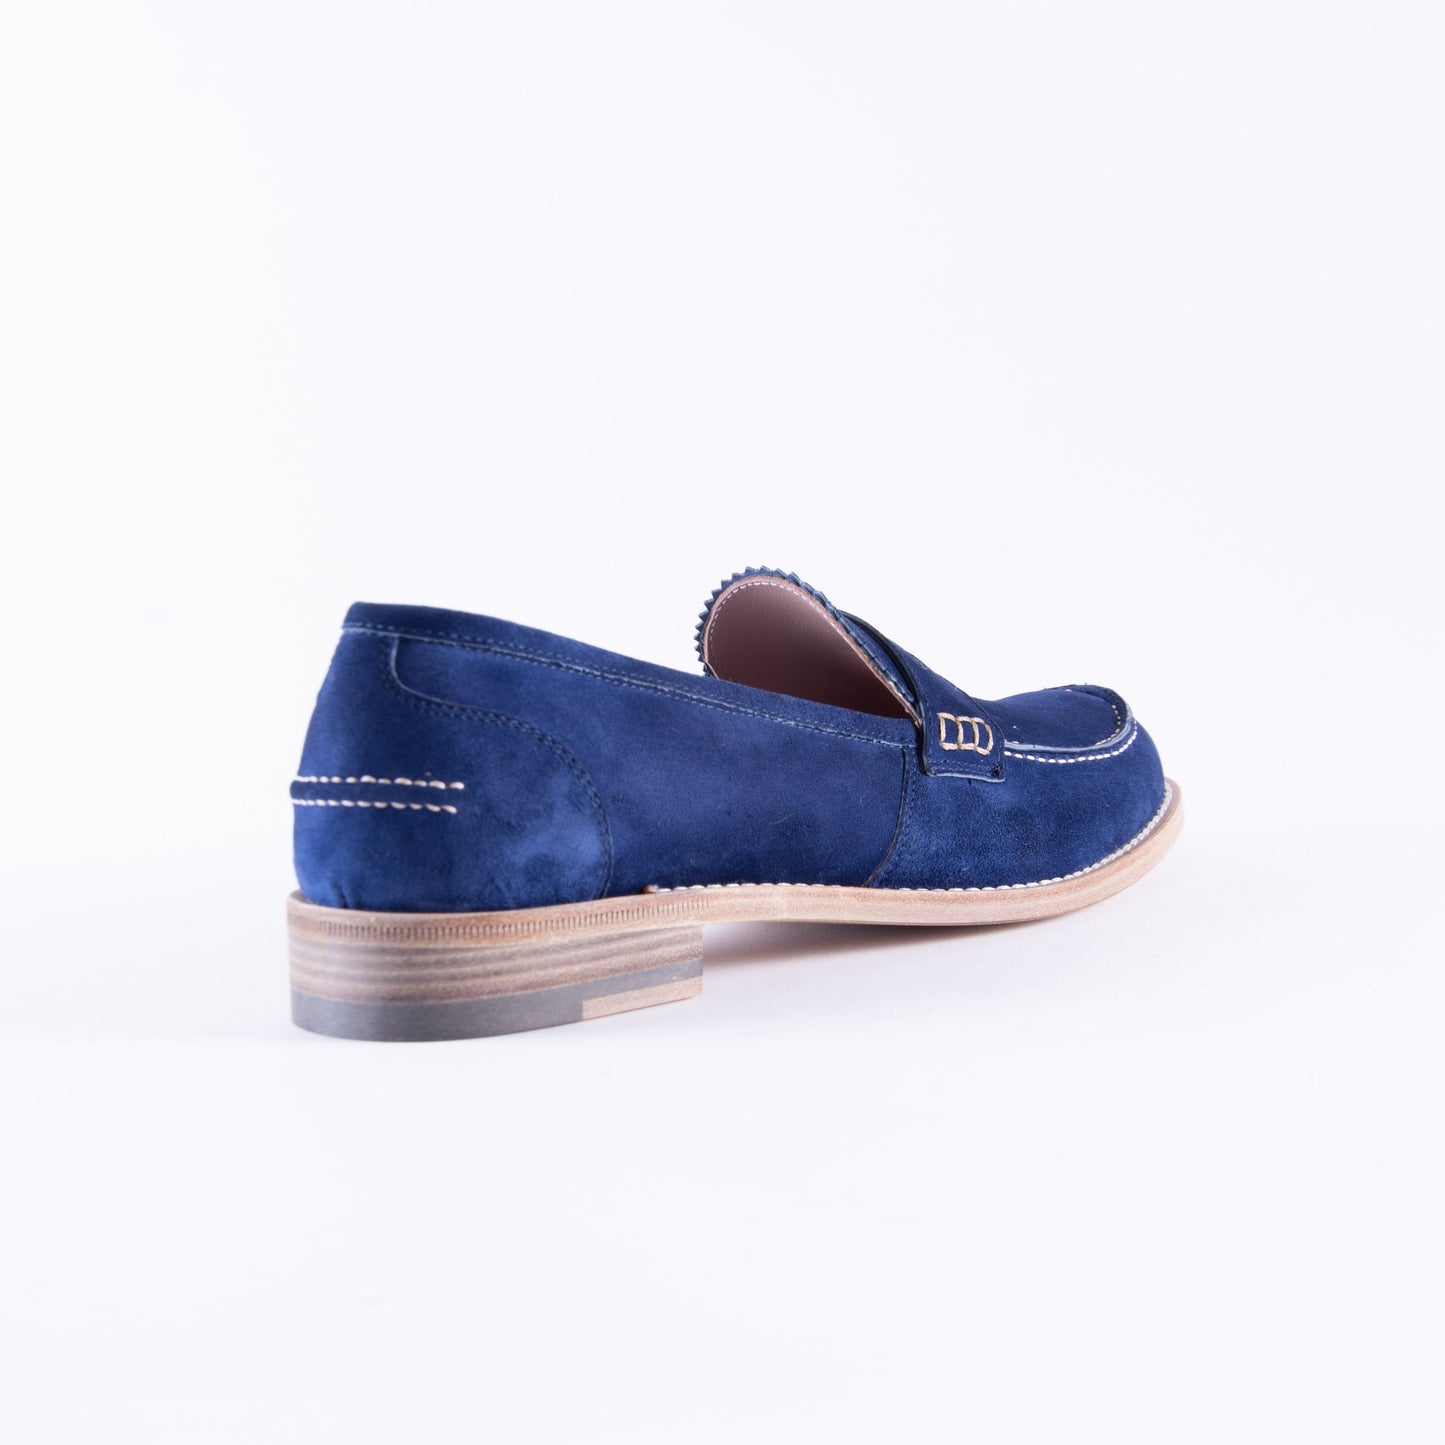 Loafer in soft blue suede